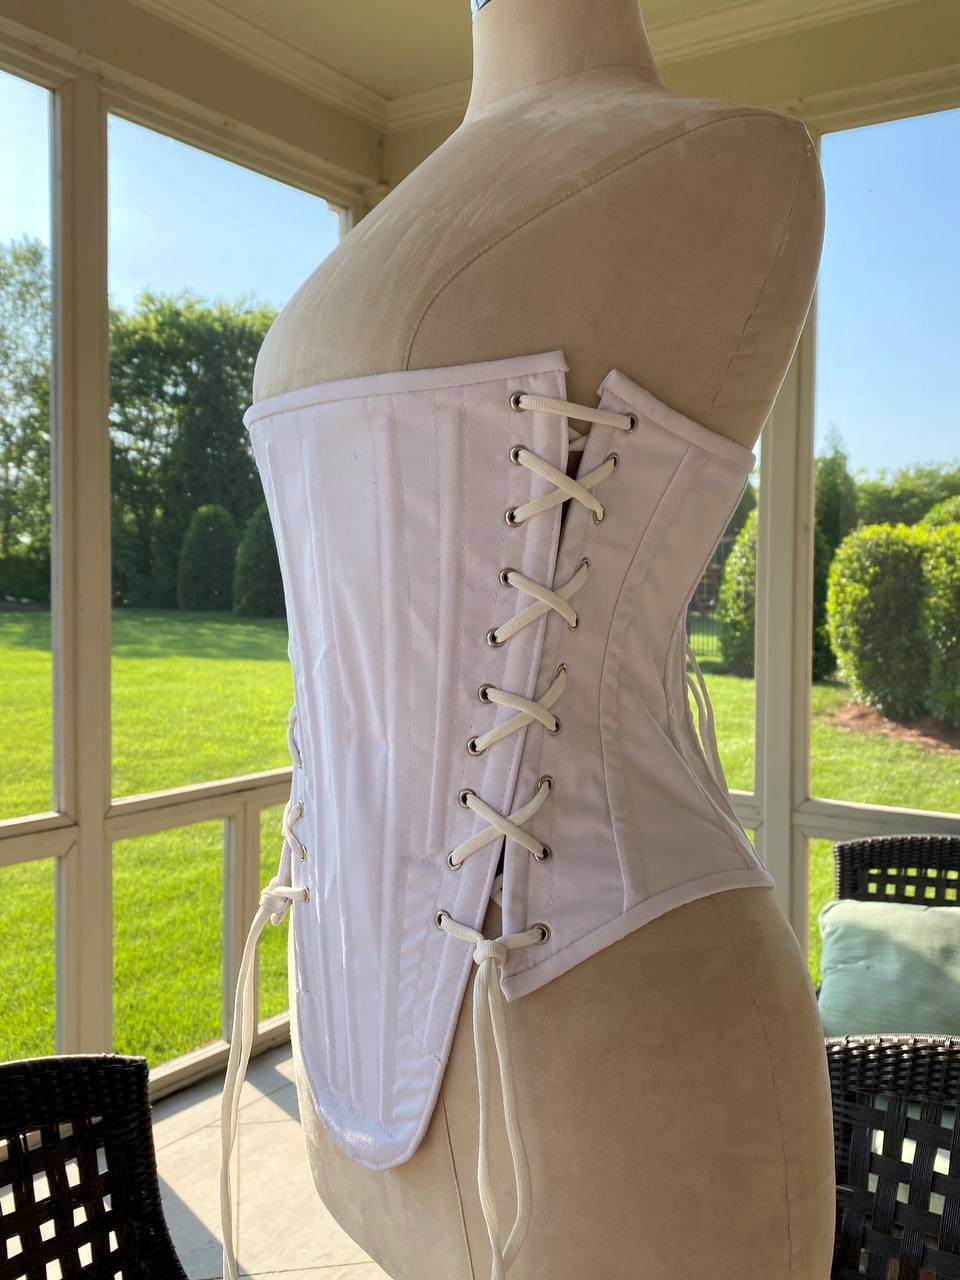 Made to measures authentic steel boned underbust underwear corset